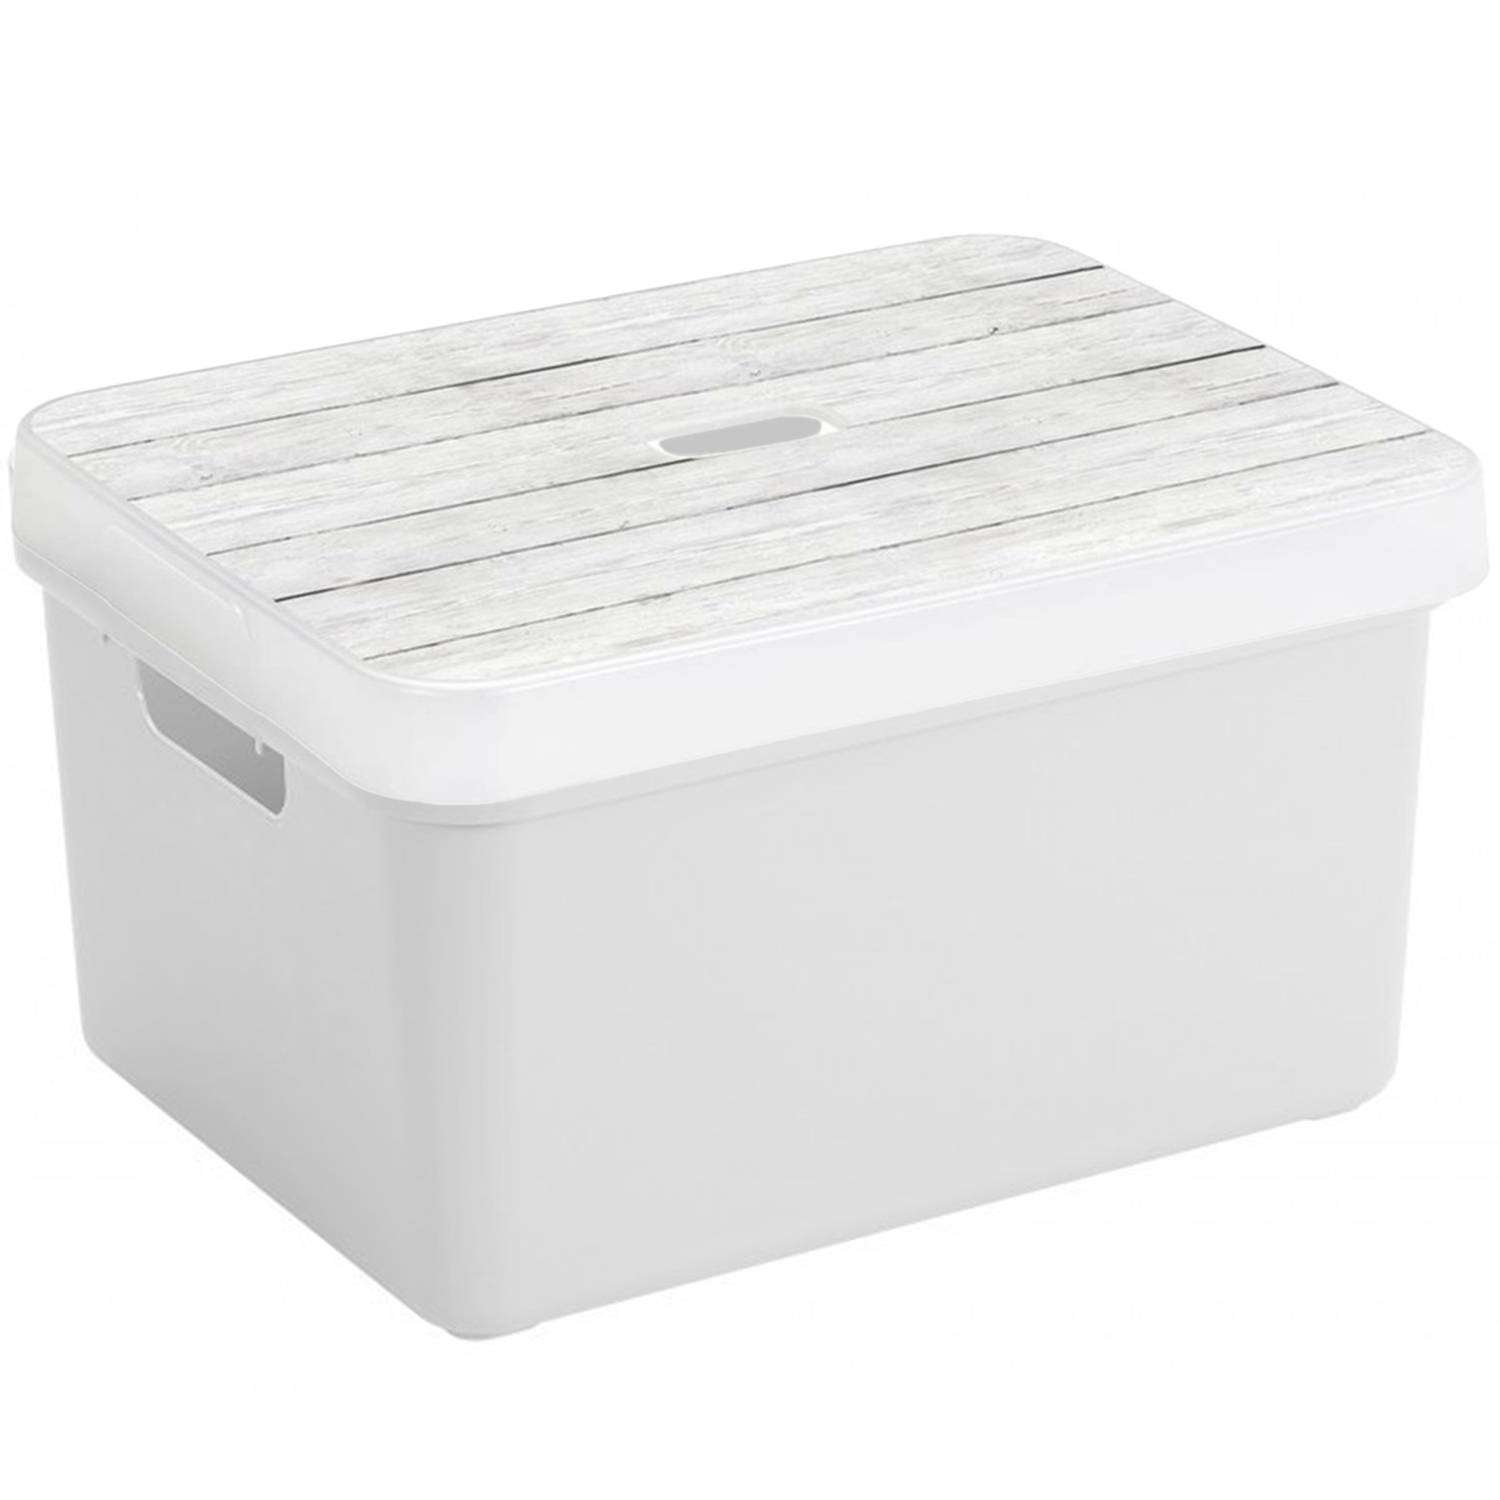 Opbergbox-opbergmand wit 32 liter kunststof met deksel Opbergbox